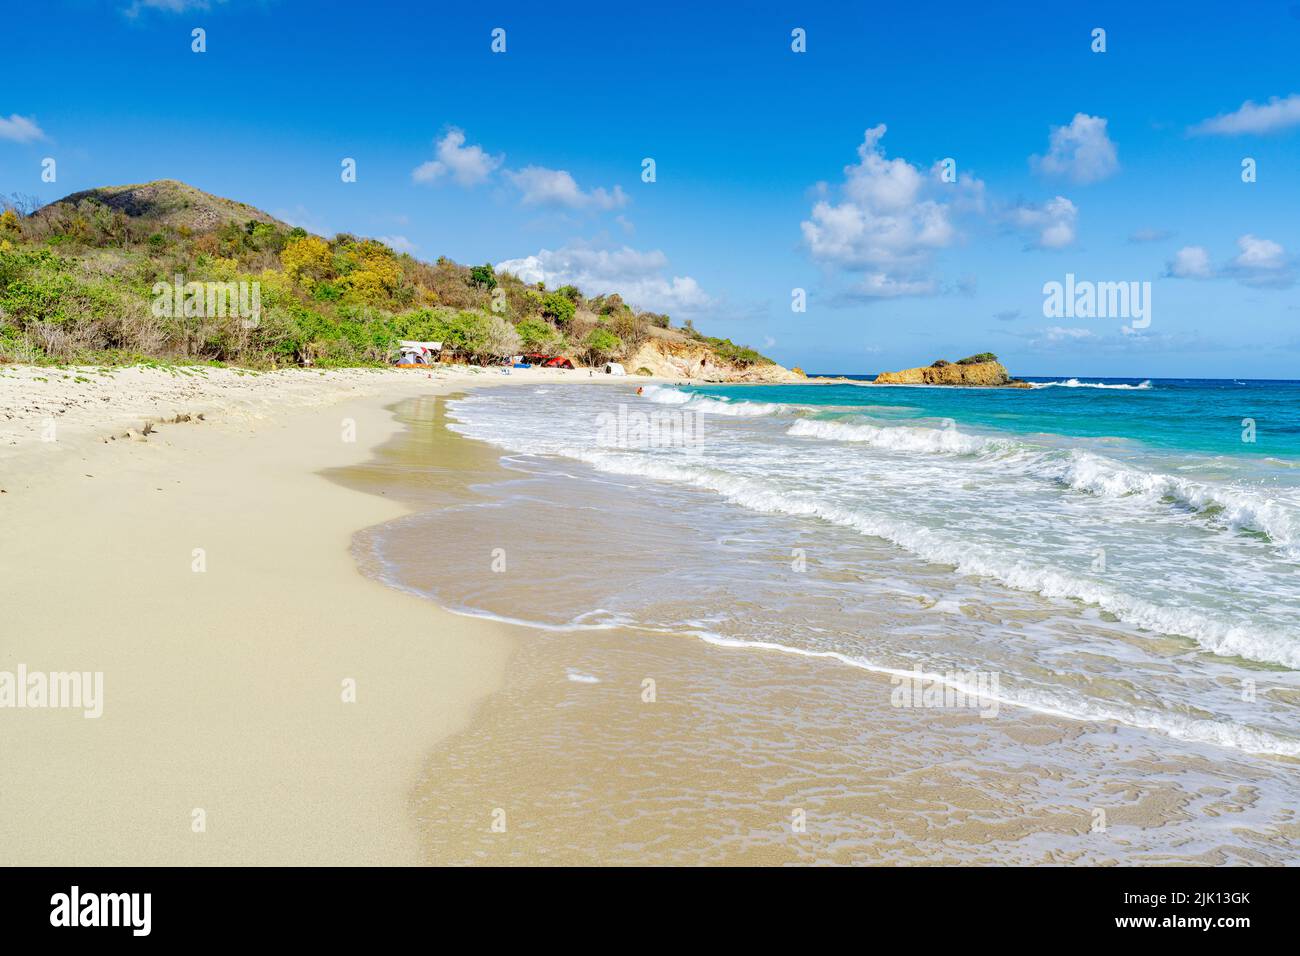 Wellen des blauen Karibischen Meeres stürzen auf den idyllischen tropischen Rendezvous Beach, Antigua, Leeward Islands, Westindien, Karibik, Mittelamerika Stockfoto